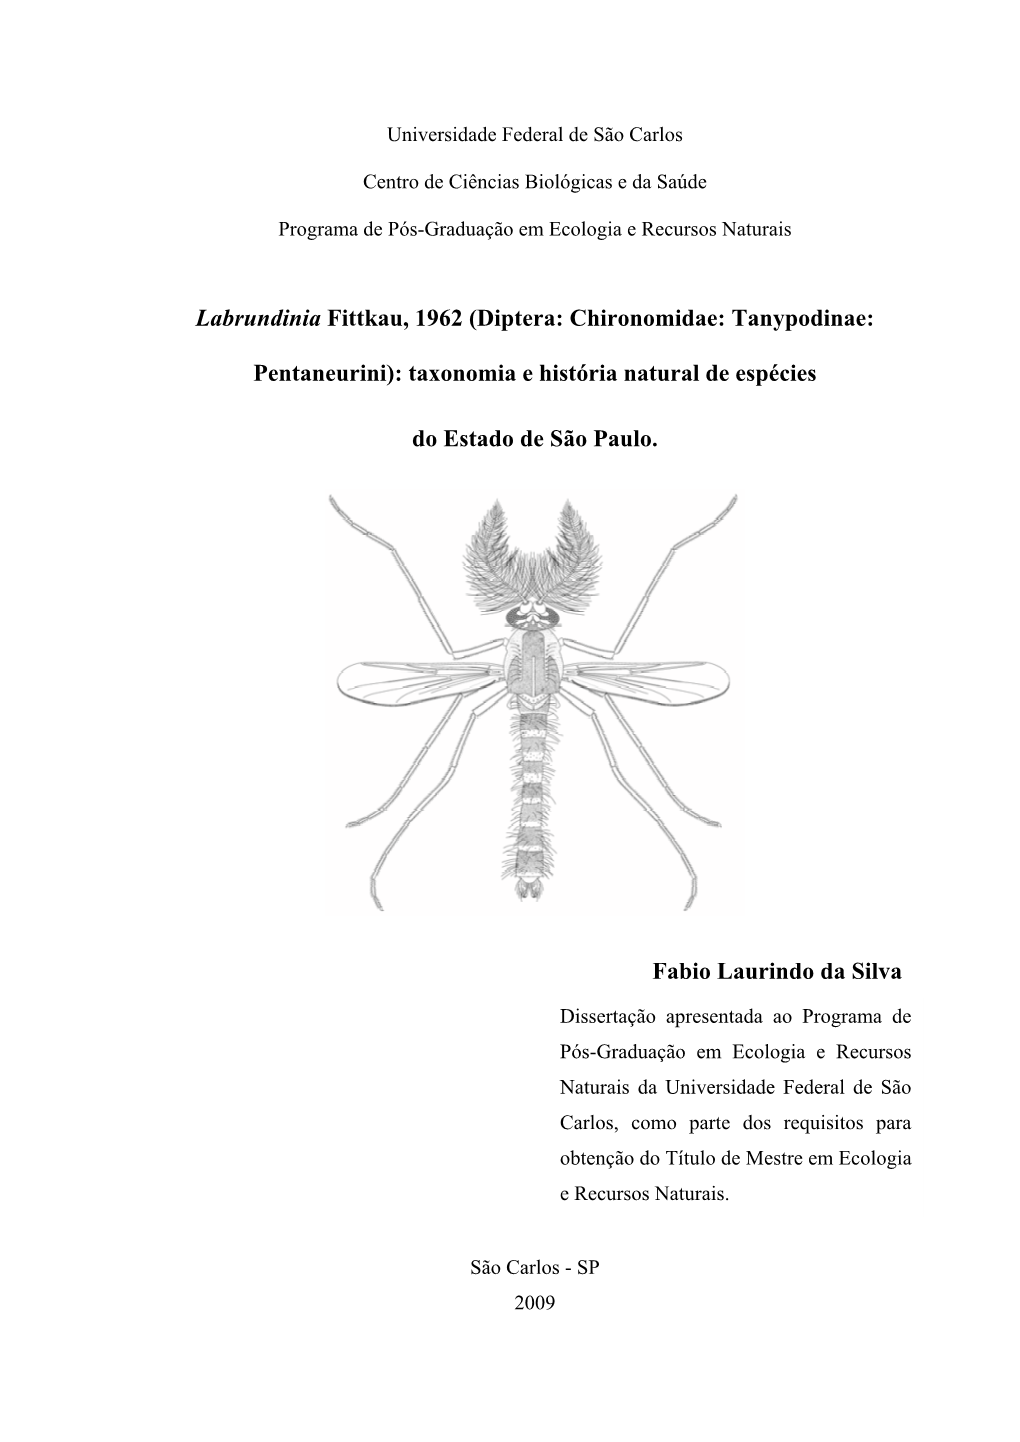 Labrundinia Fittkau, 1962 (Diptera: Chironomidae: Tanypodinae